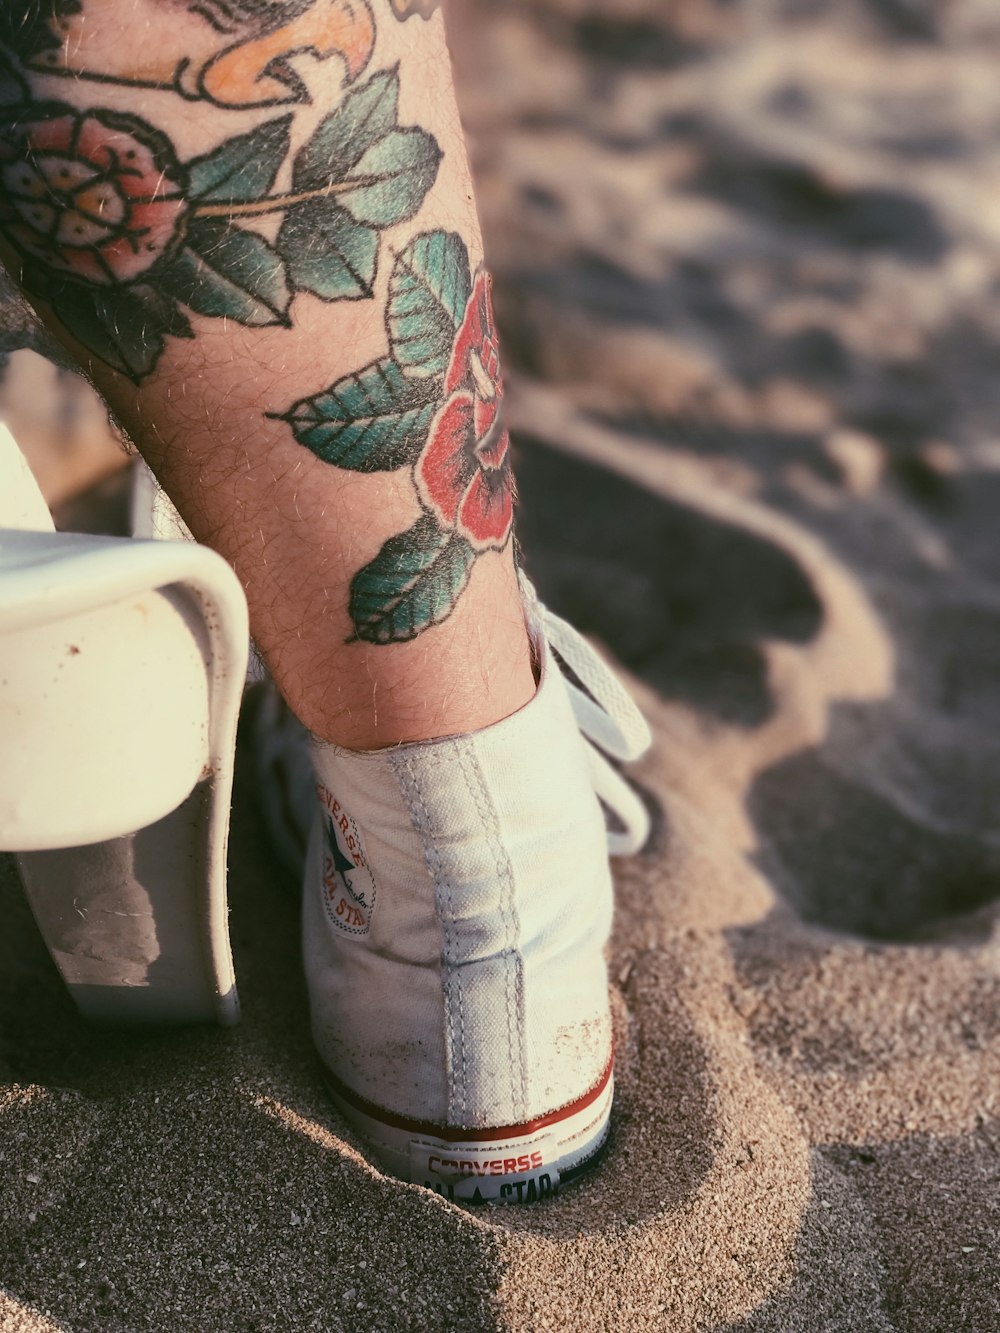 Persona con tatuaje de rosa roja en la pierna izquierda